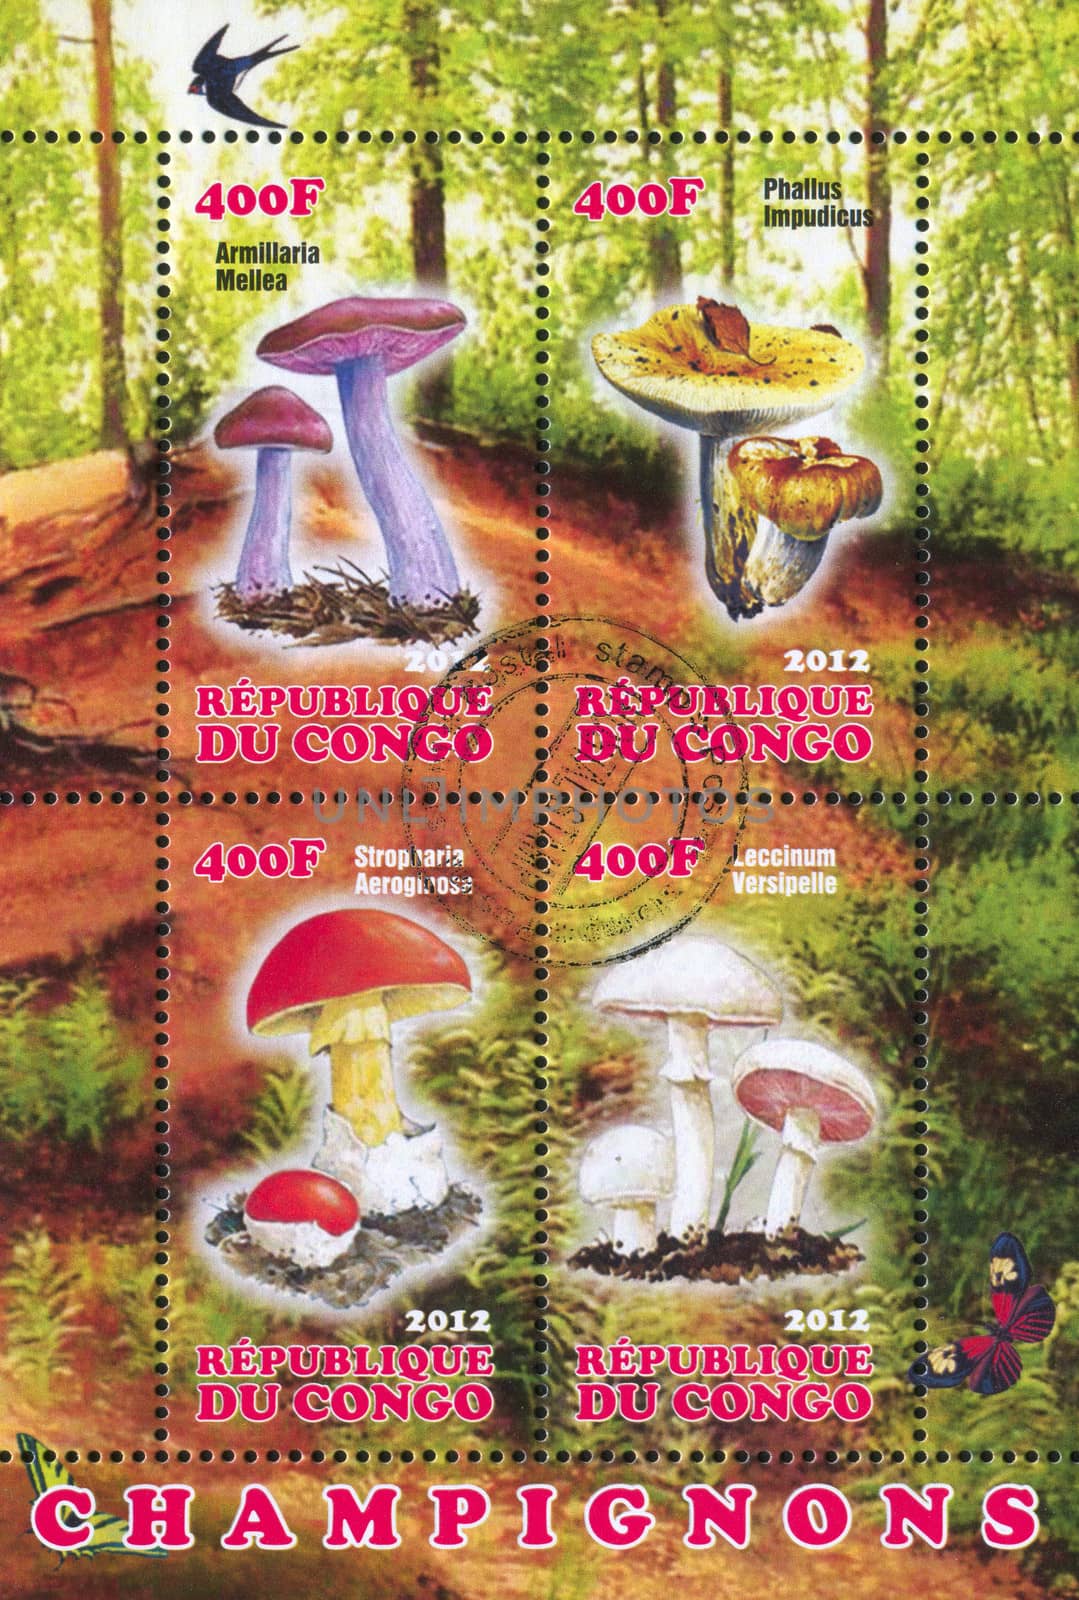 CONGO - CIRCA 2012: stamp printed by Congo, shows mushroom, circa 2012